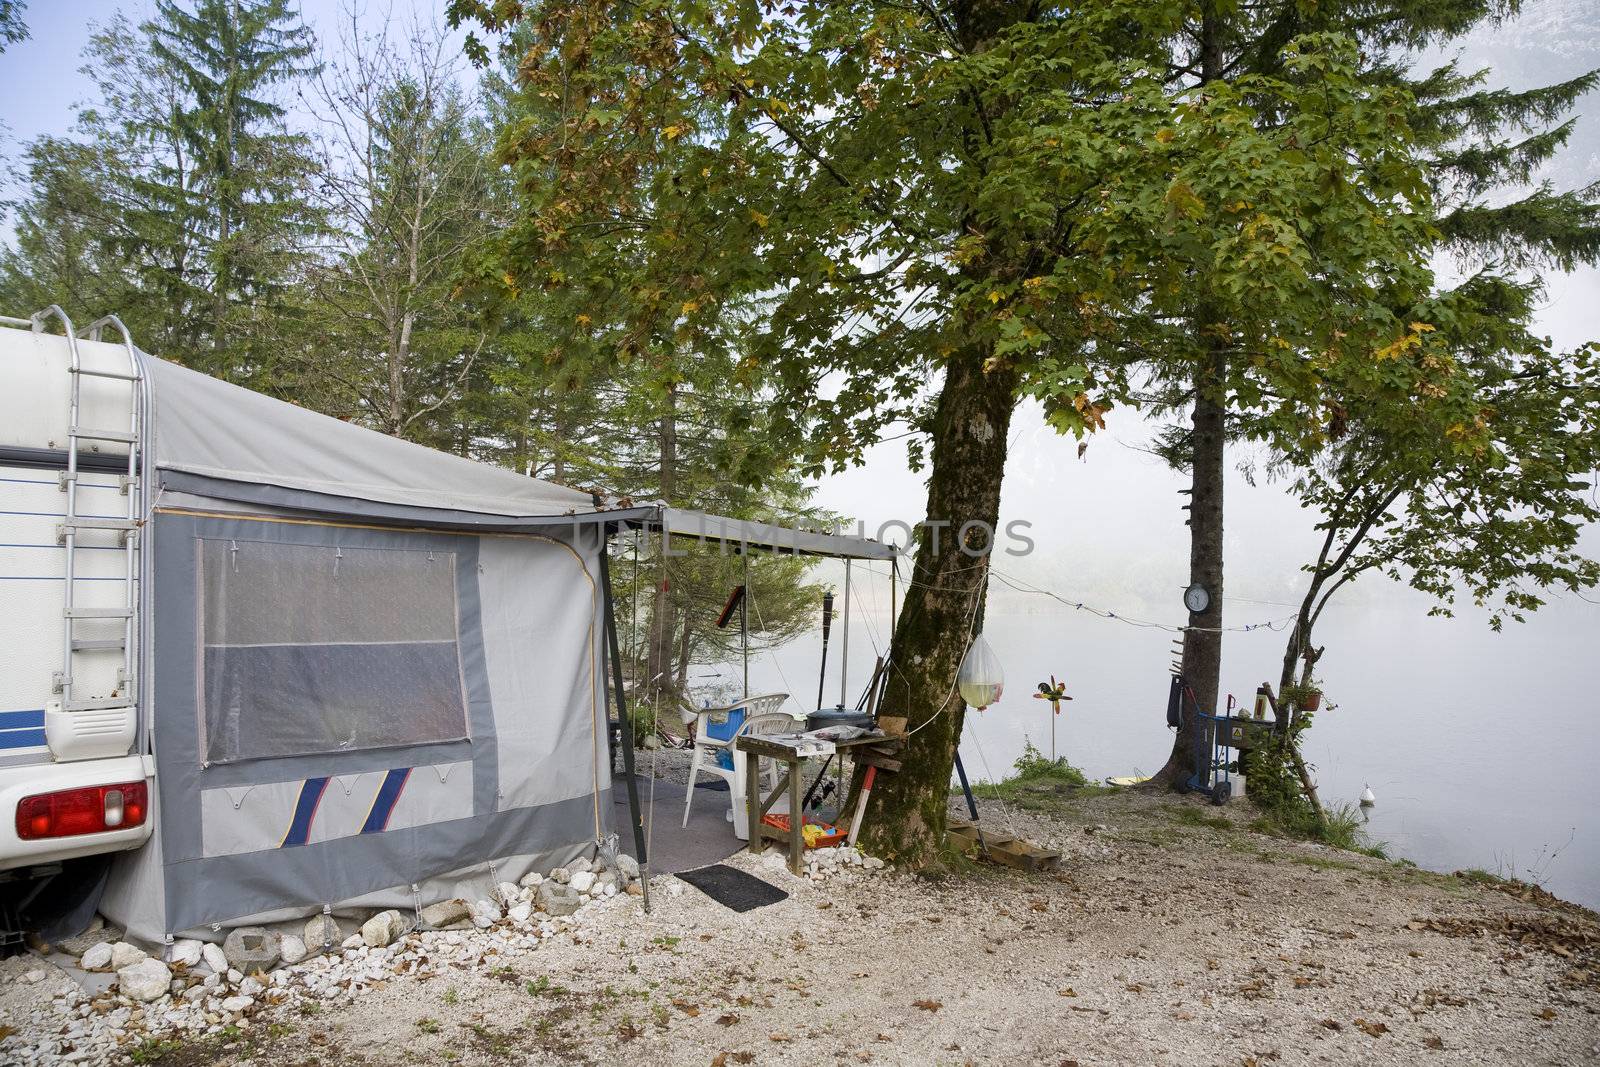 Campground foggy morning by Lake Bohinj, Slovenia.